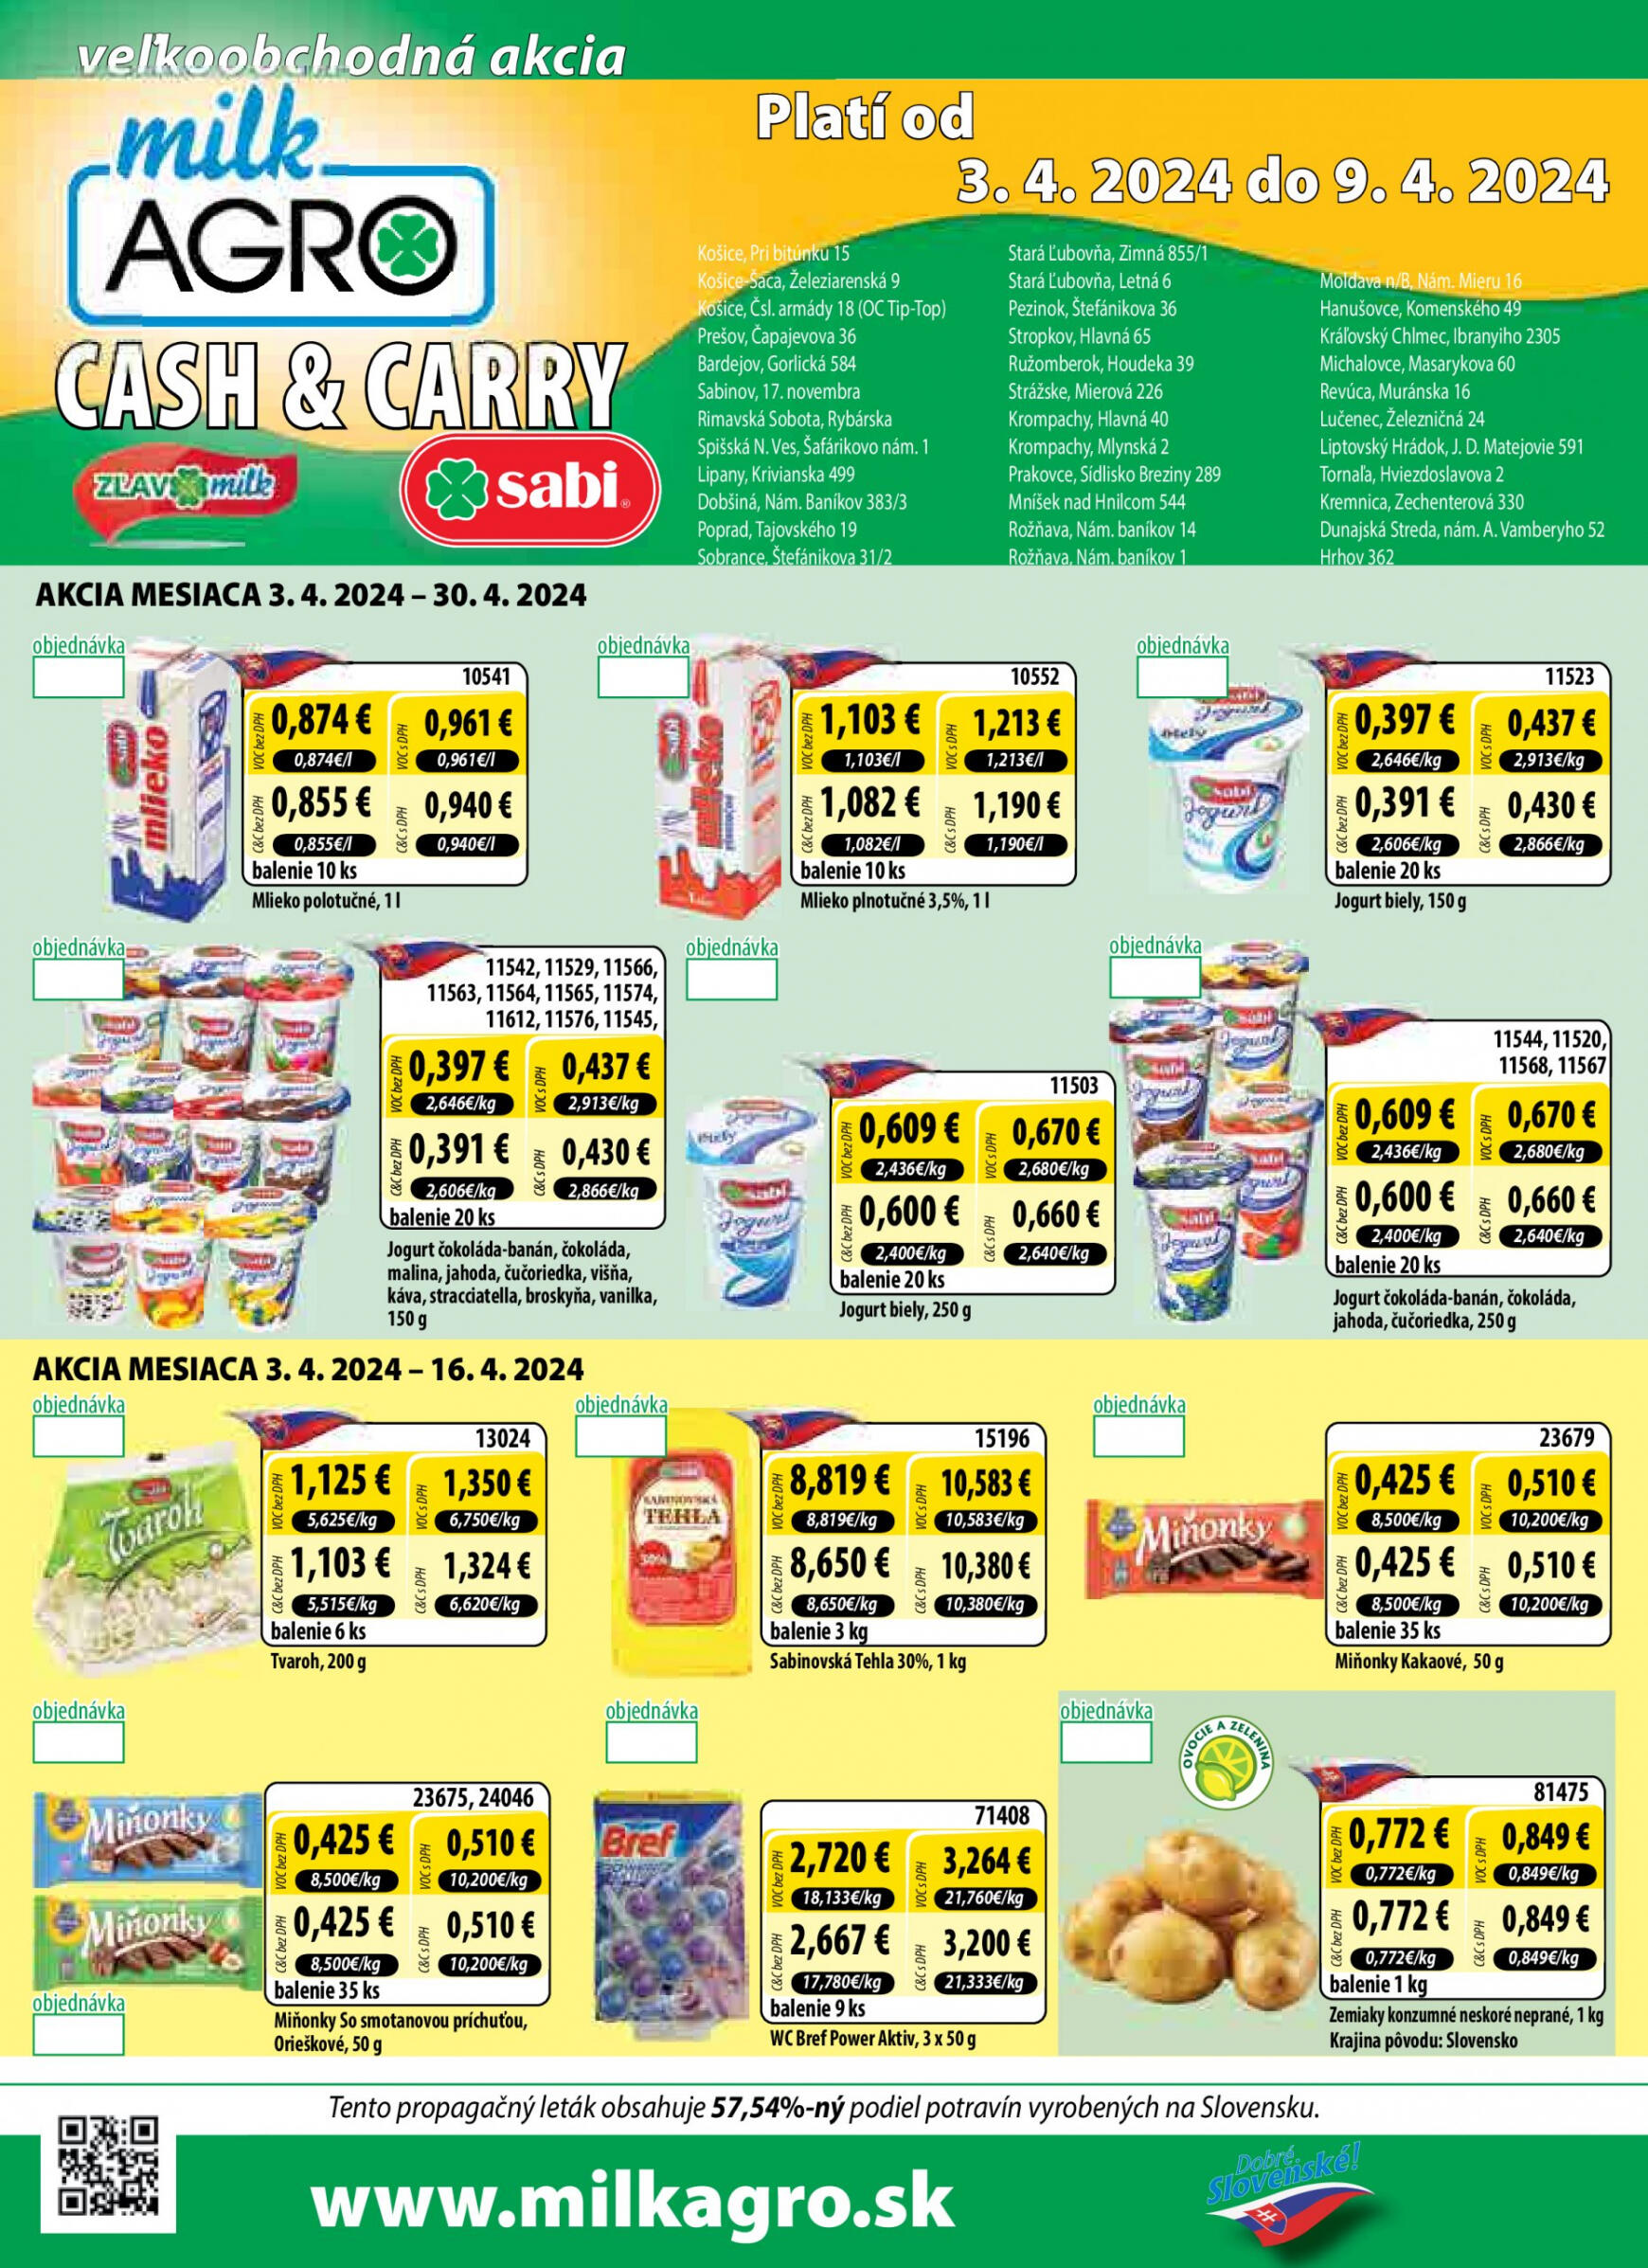 milk-agro - Milk Agro - Cash & Carry platný od 03.04.2024